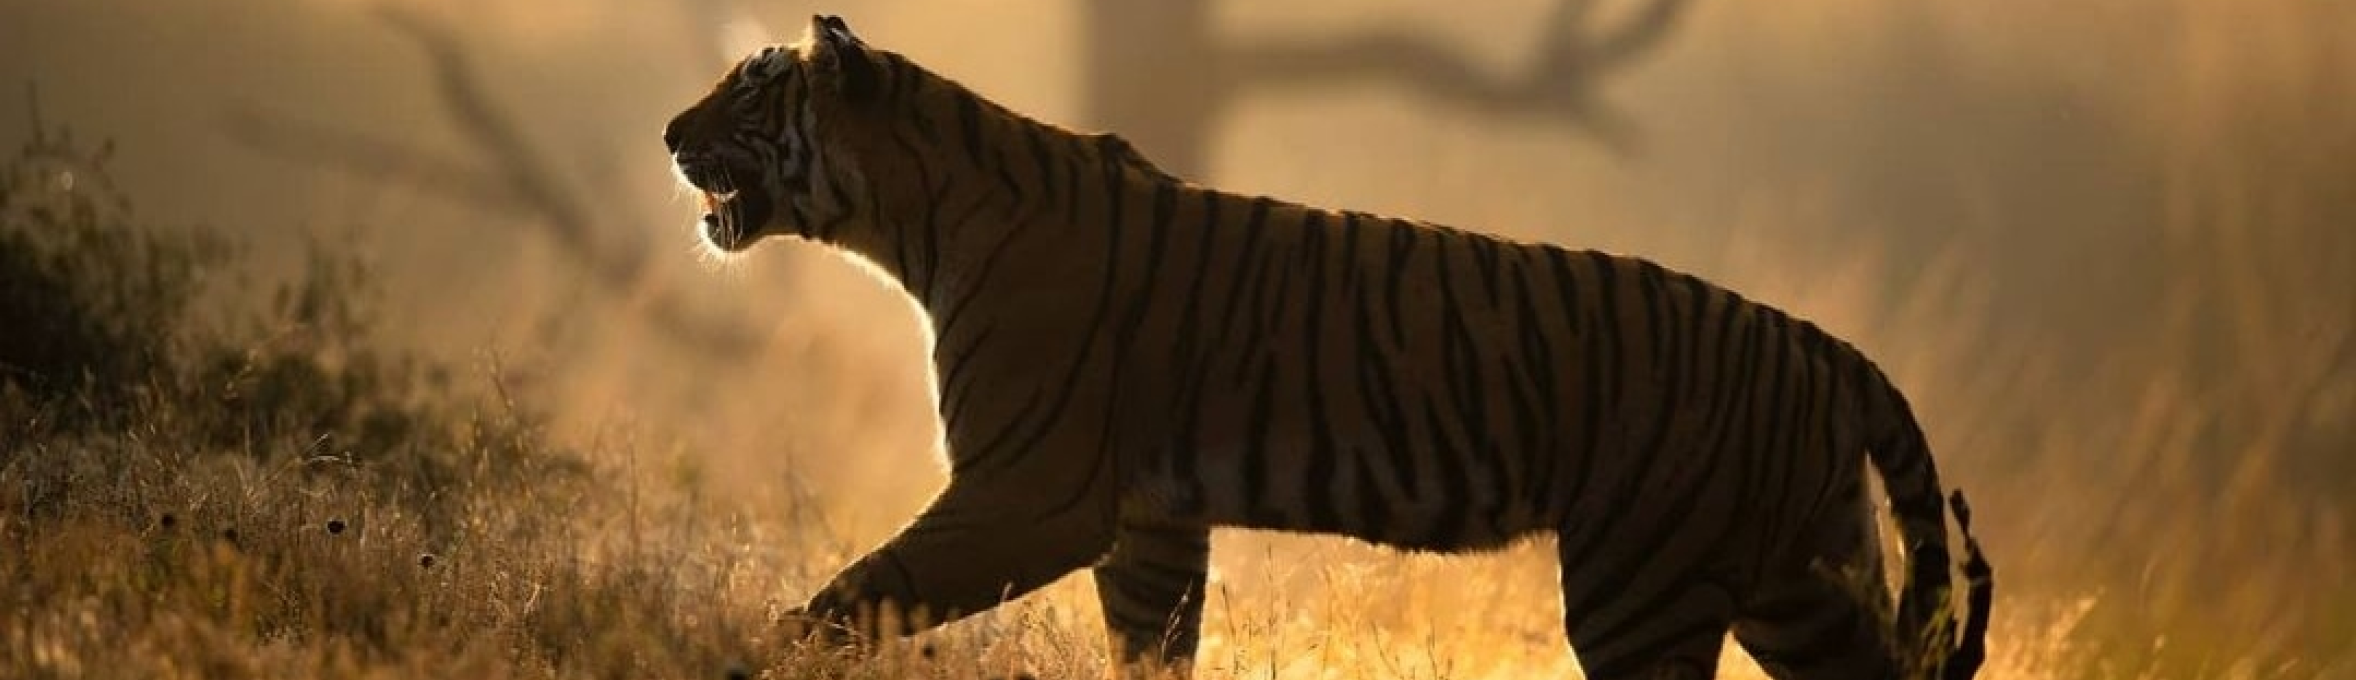 Tiger's walk by Harsha Narsimhamurthy